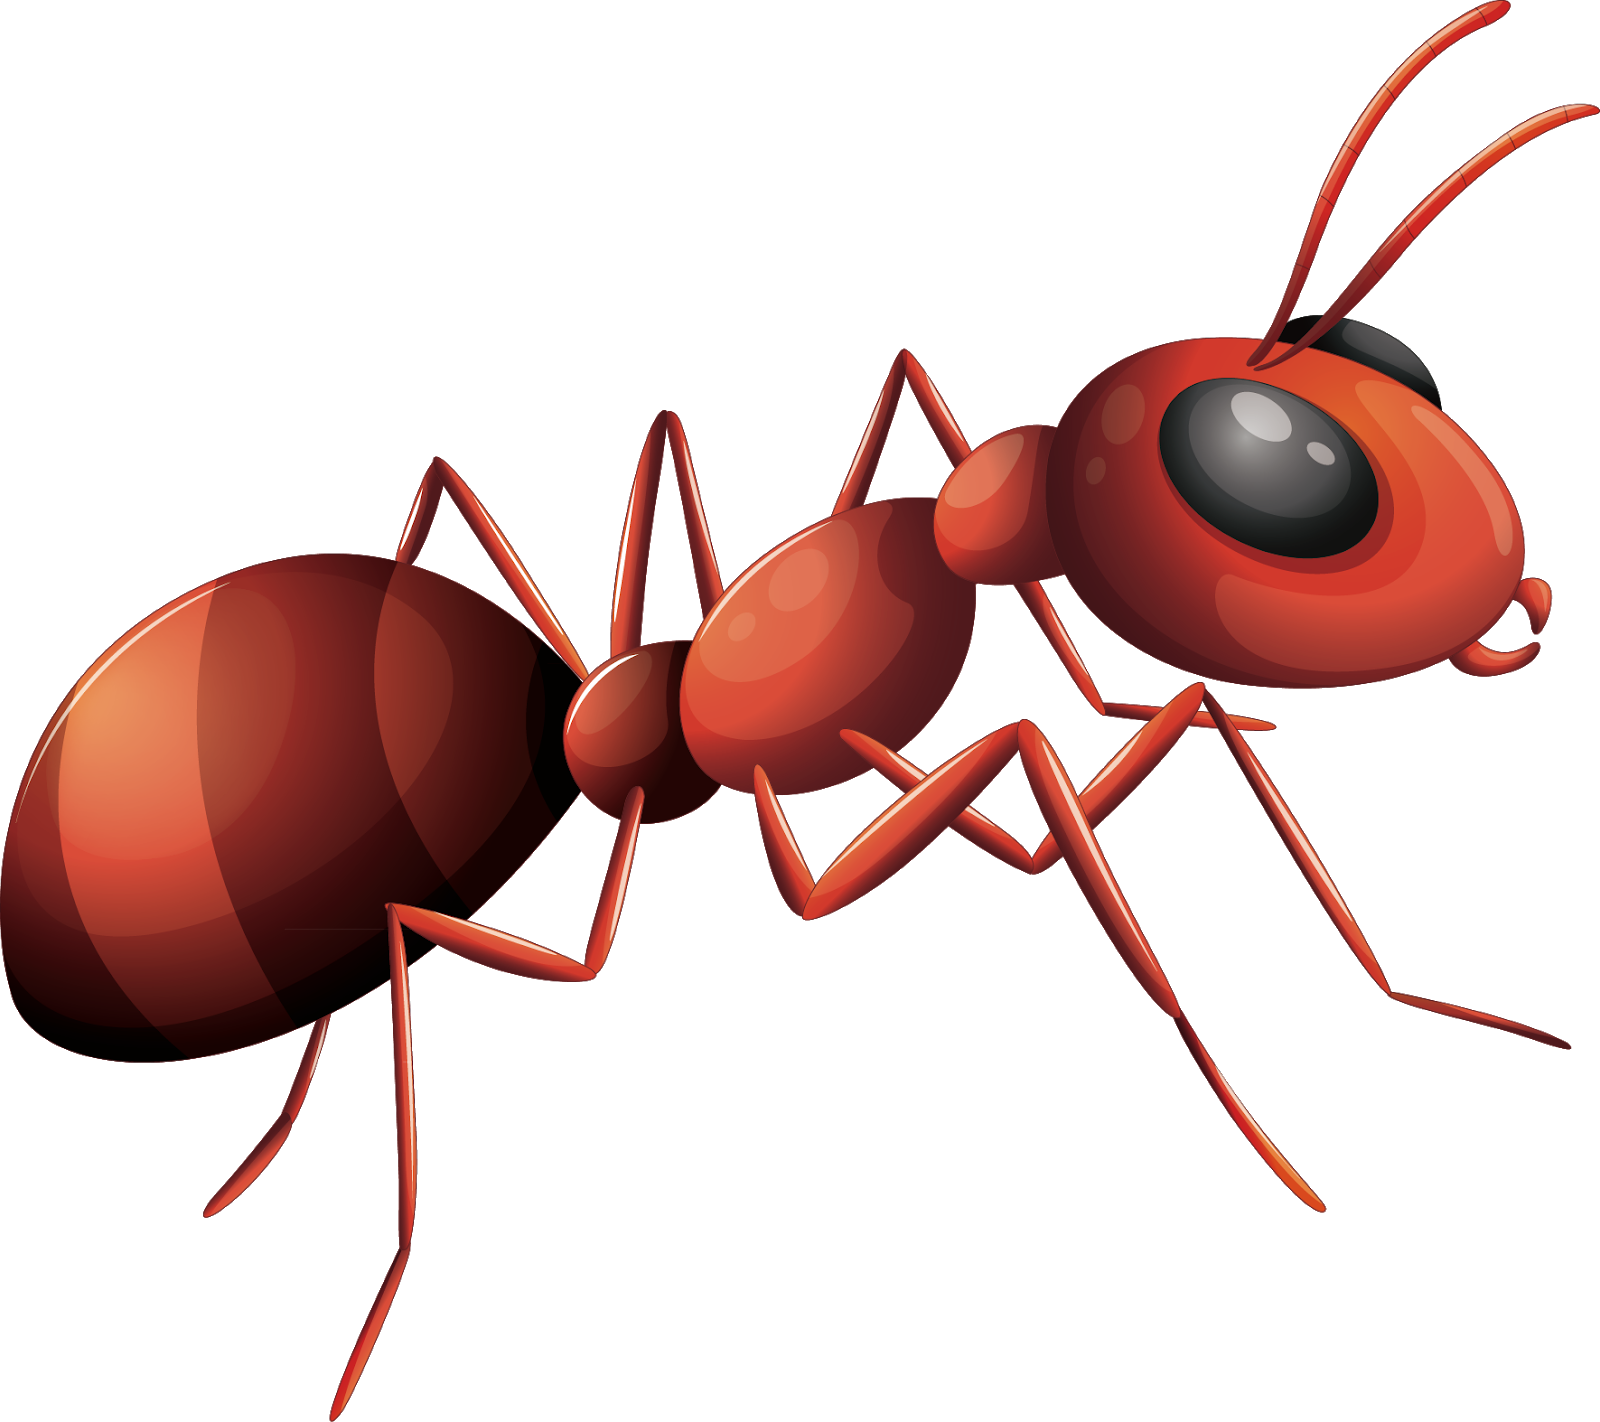 Red Ant Illustration PNG